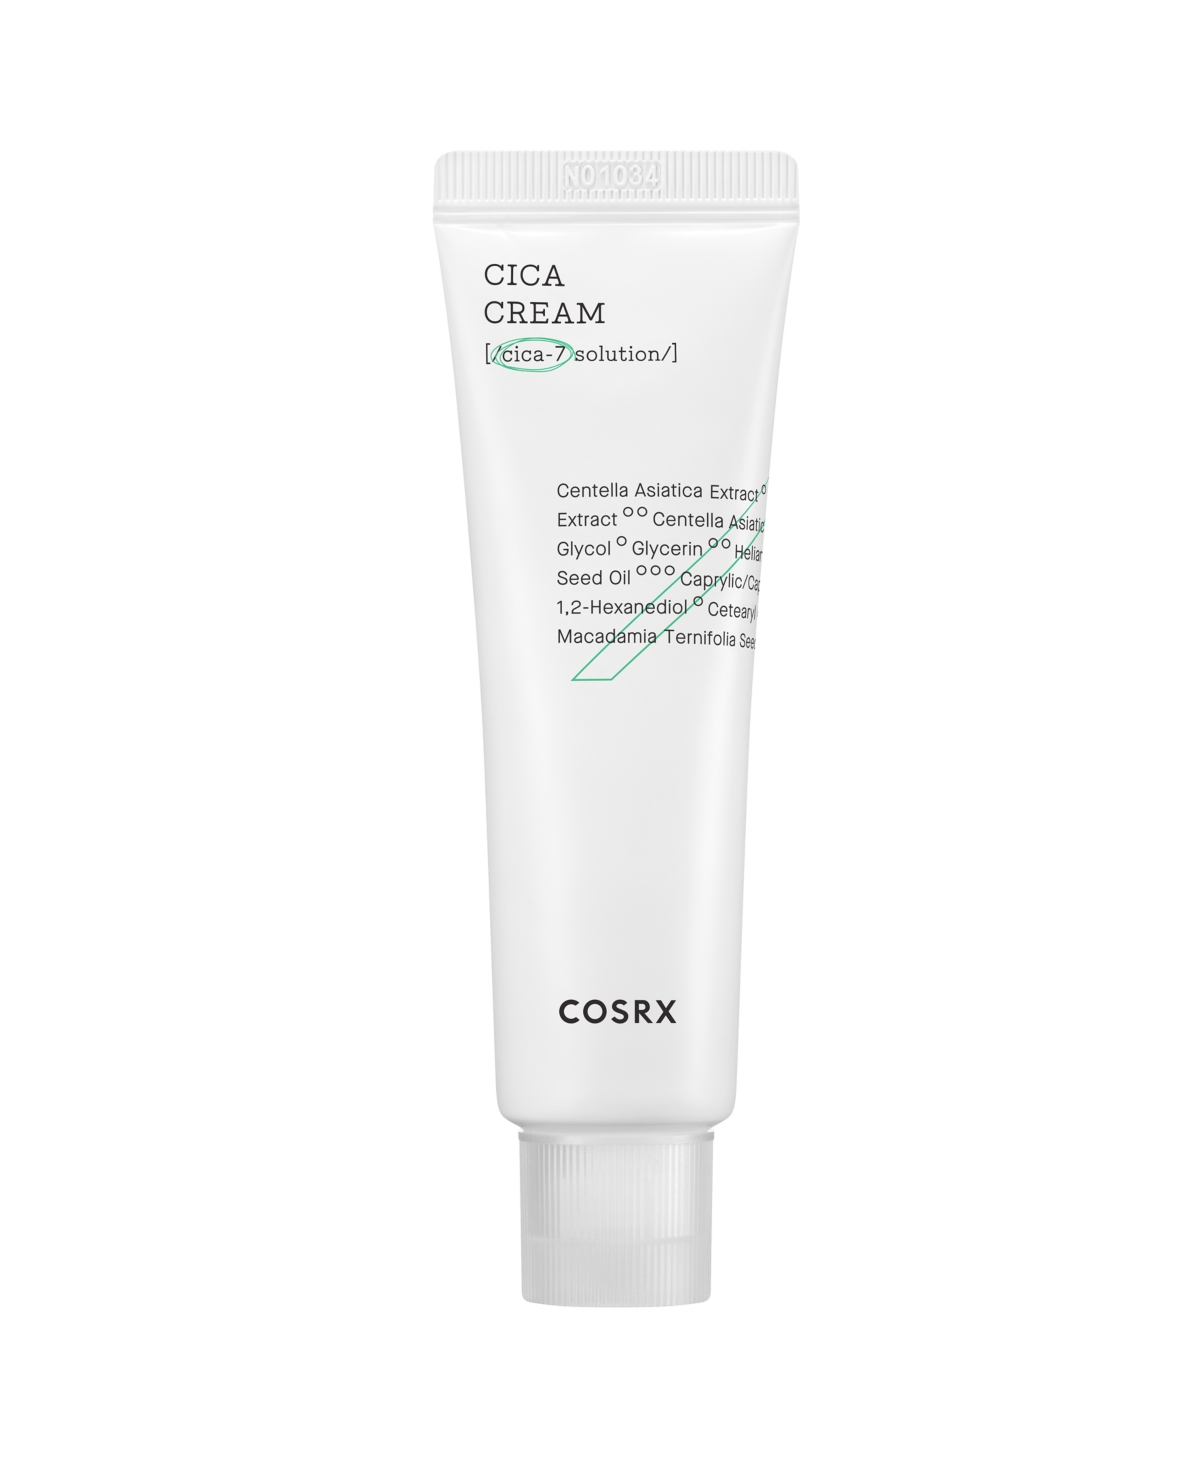 Cosrx Pure Fit Cica Cream, 1.69 fl. oz